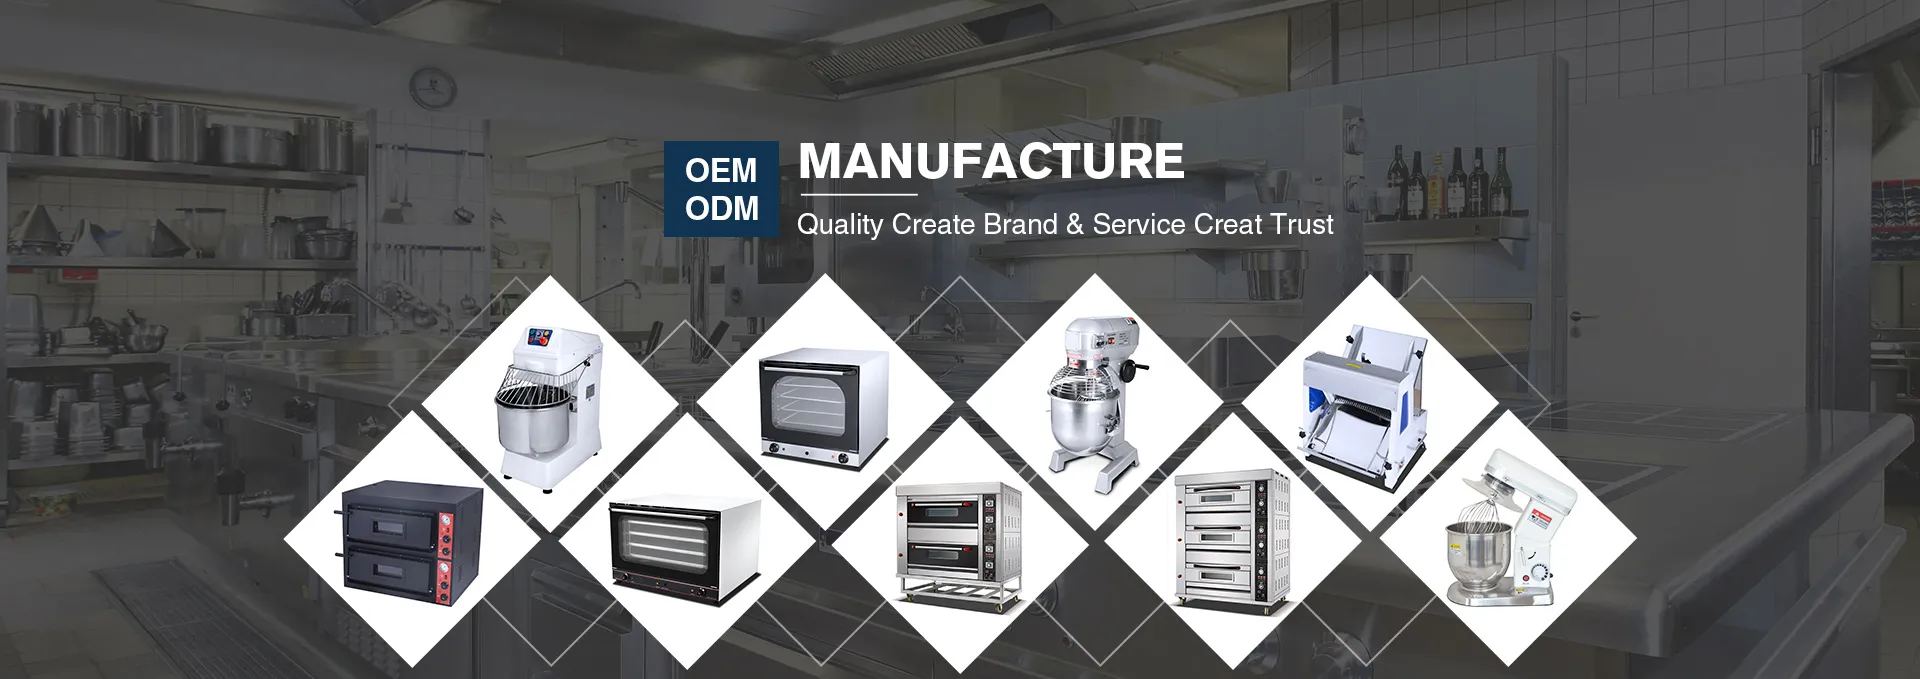 ODM  Quality Create Brand & Service Creat Trust